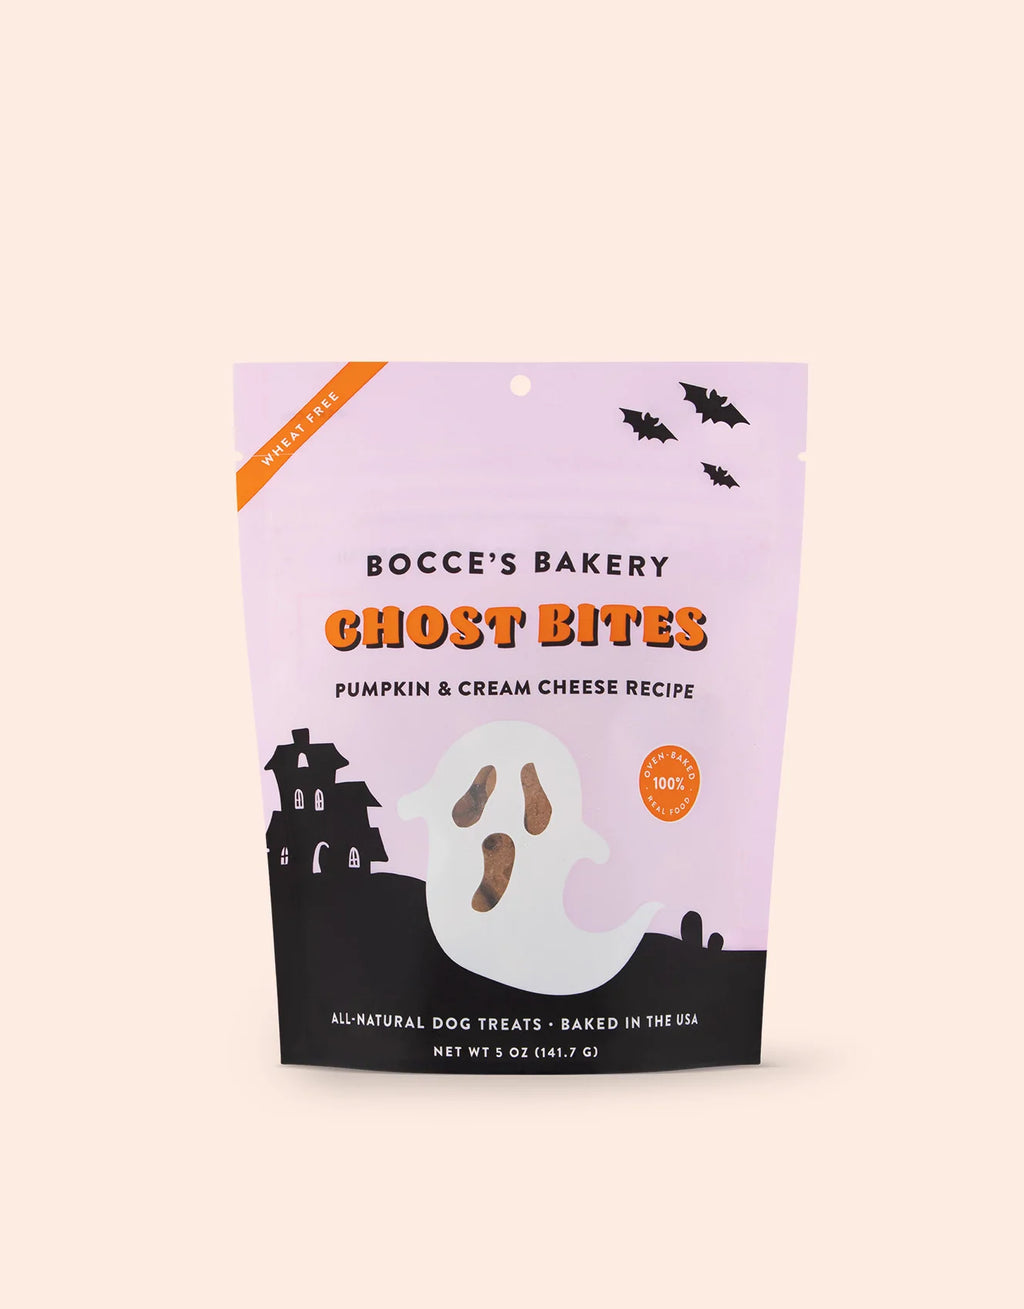 Bocce's "Ghost Bites" Dog Treats